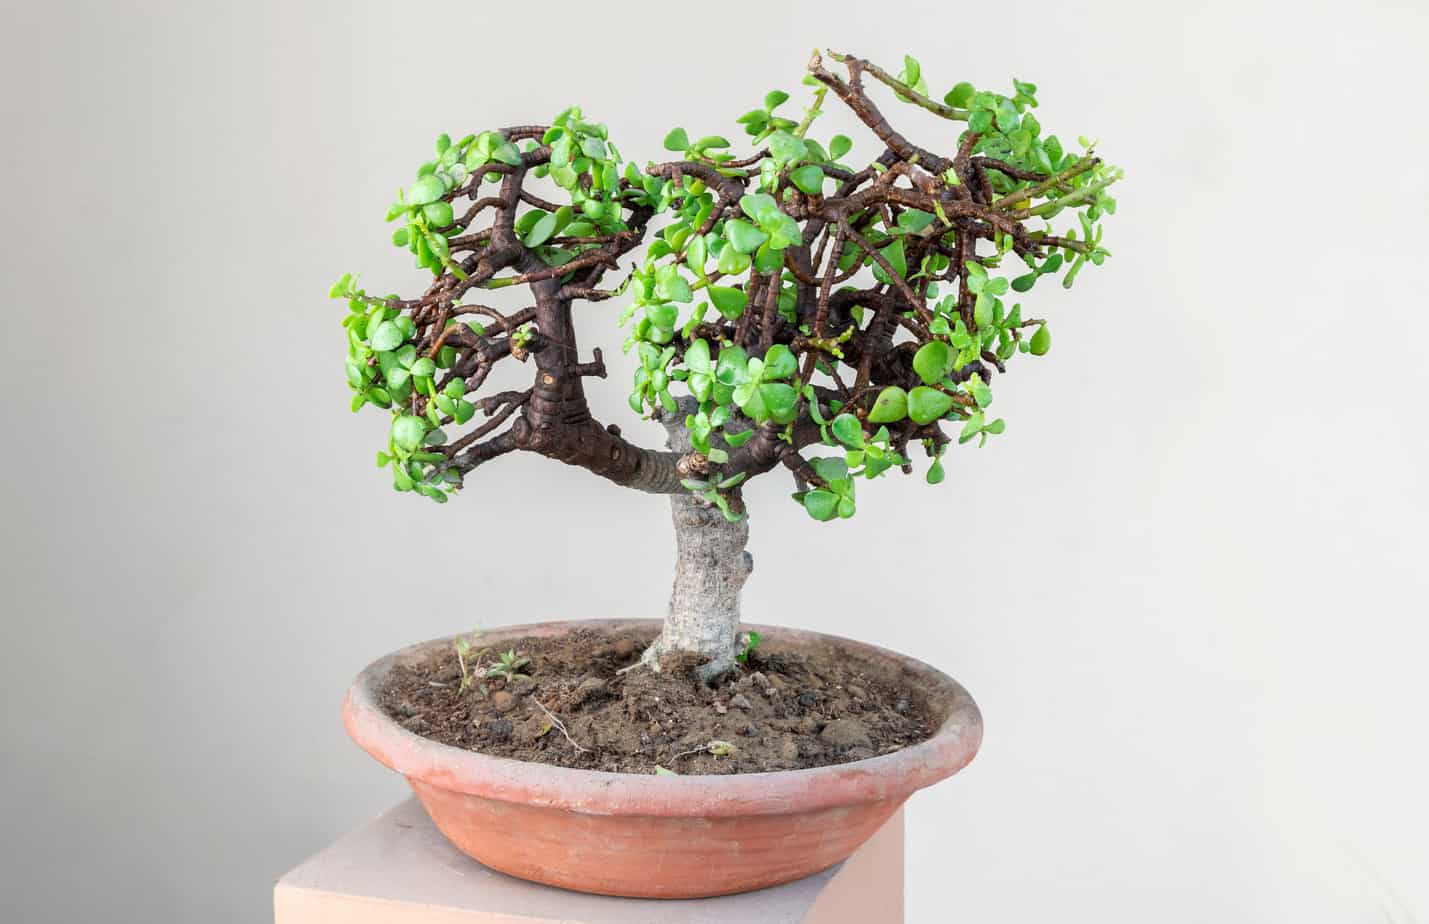 Jade plant bonsai